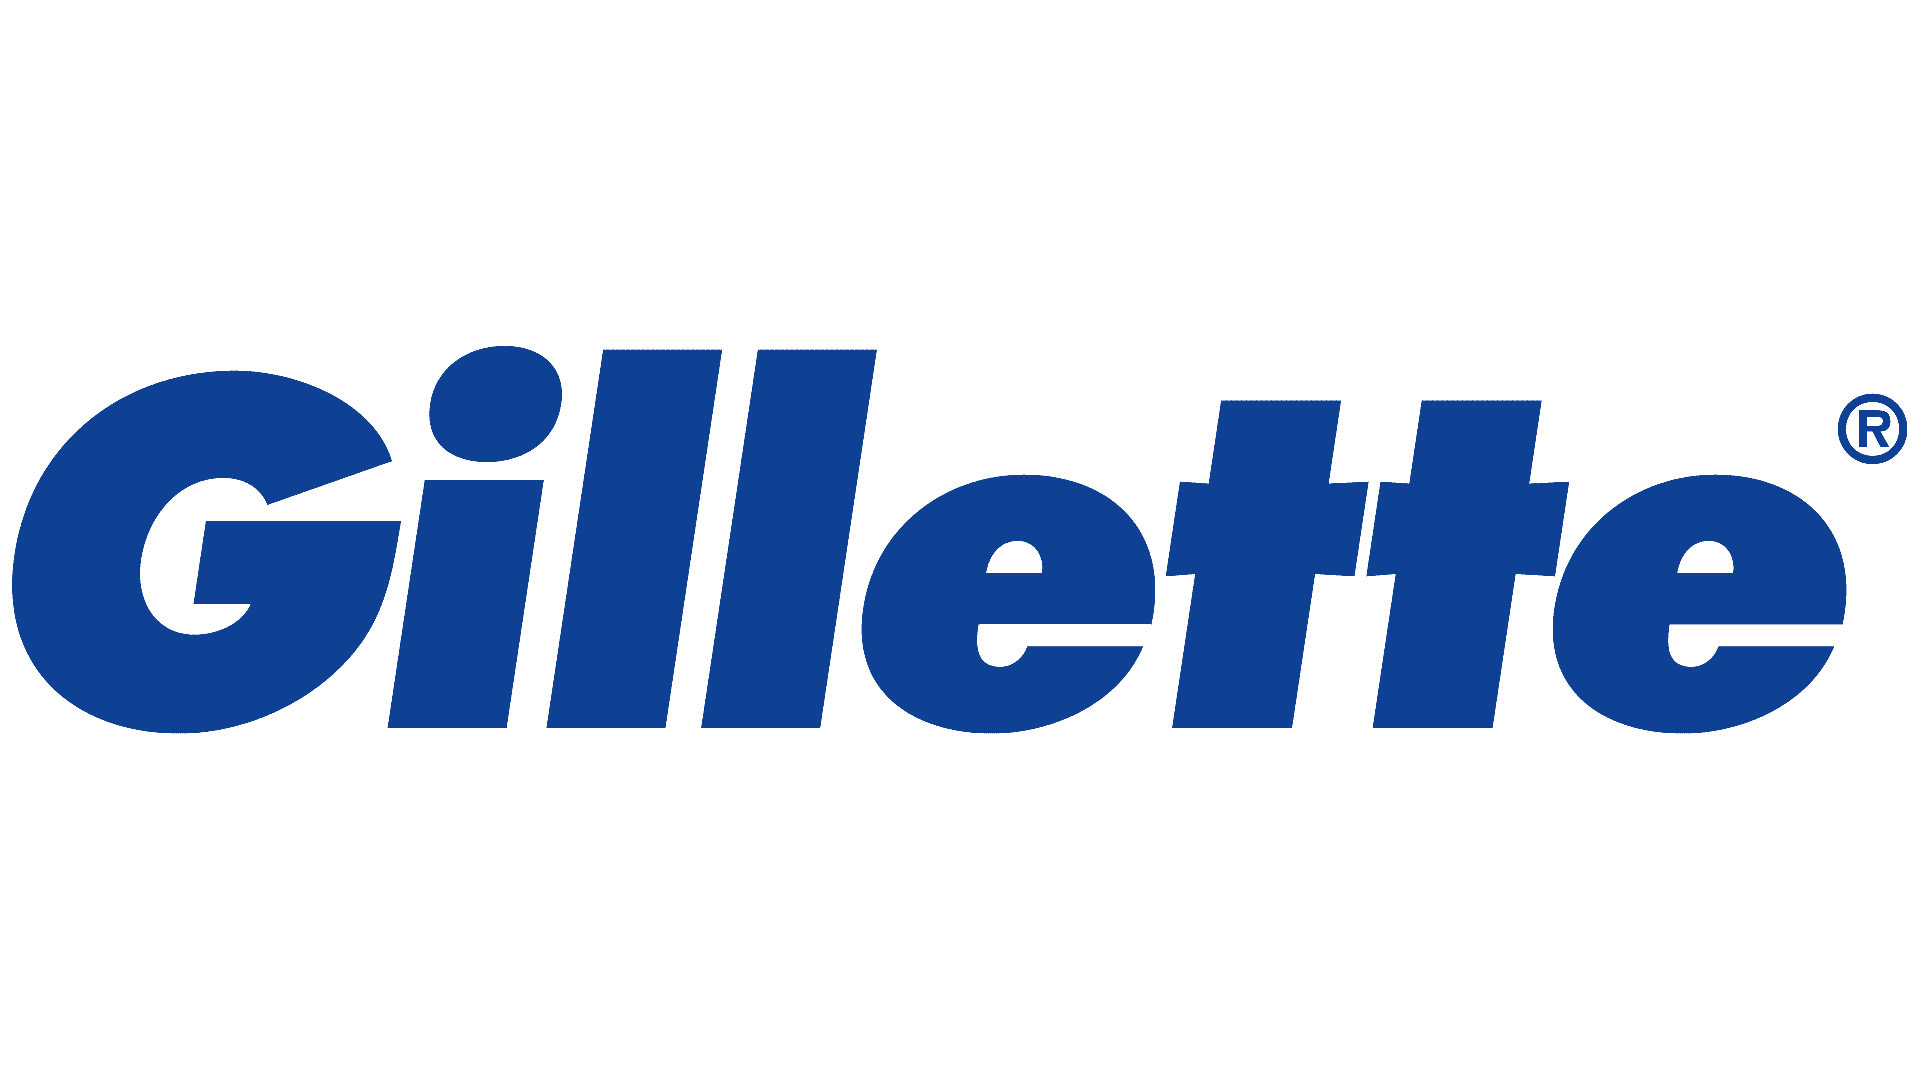 Brand: Gillette